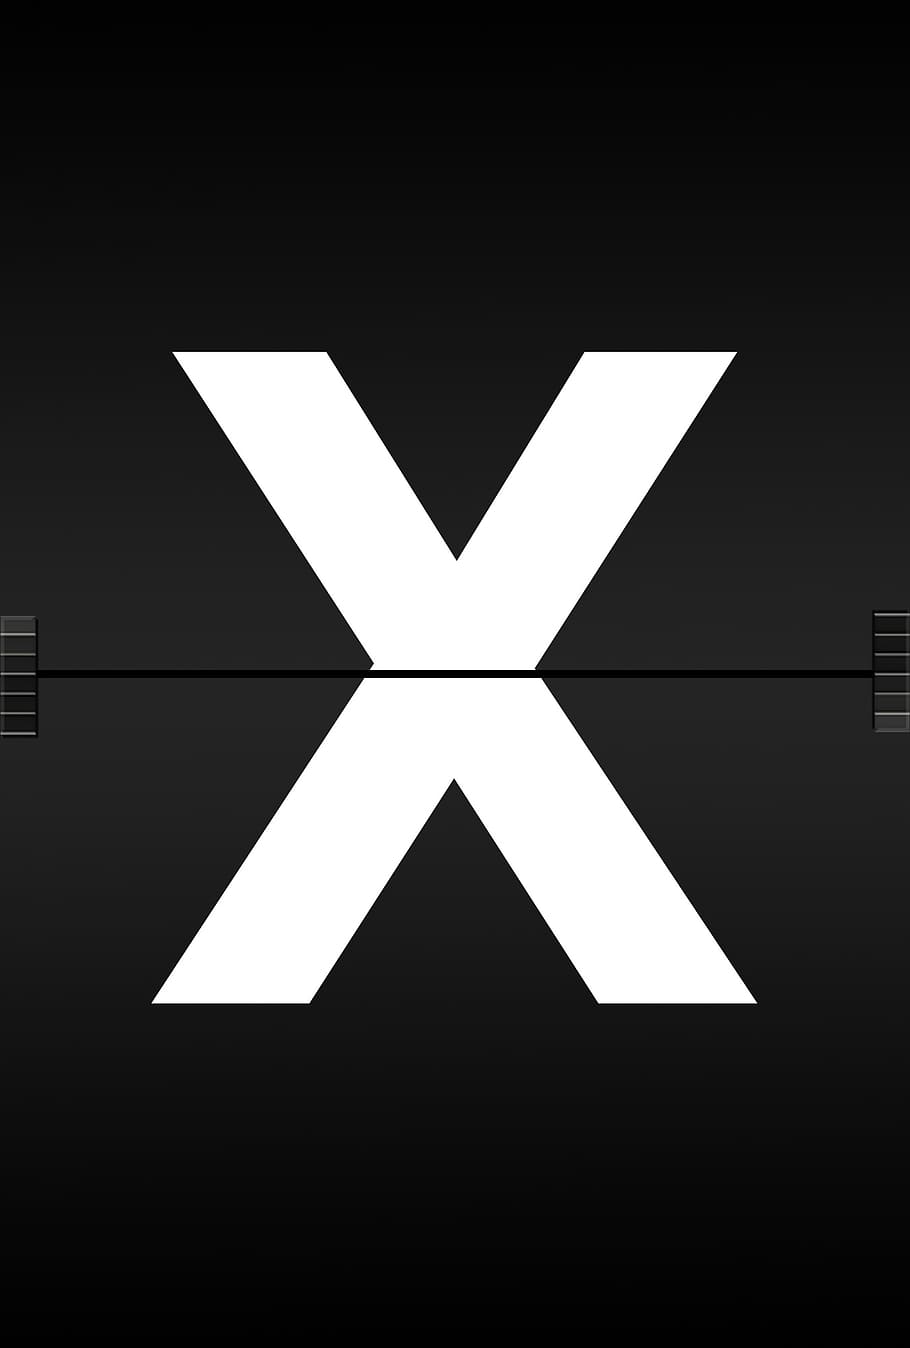 x logo, letters, abc, alphabet, journal font, airport, scoreboard, ad, railway station, board